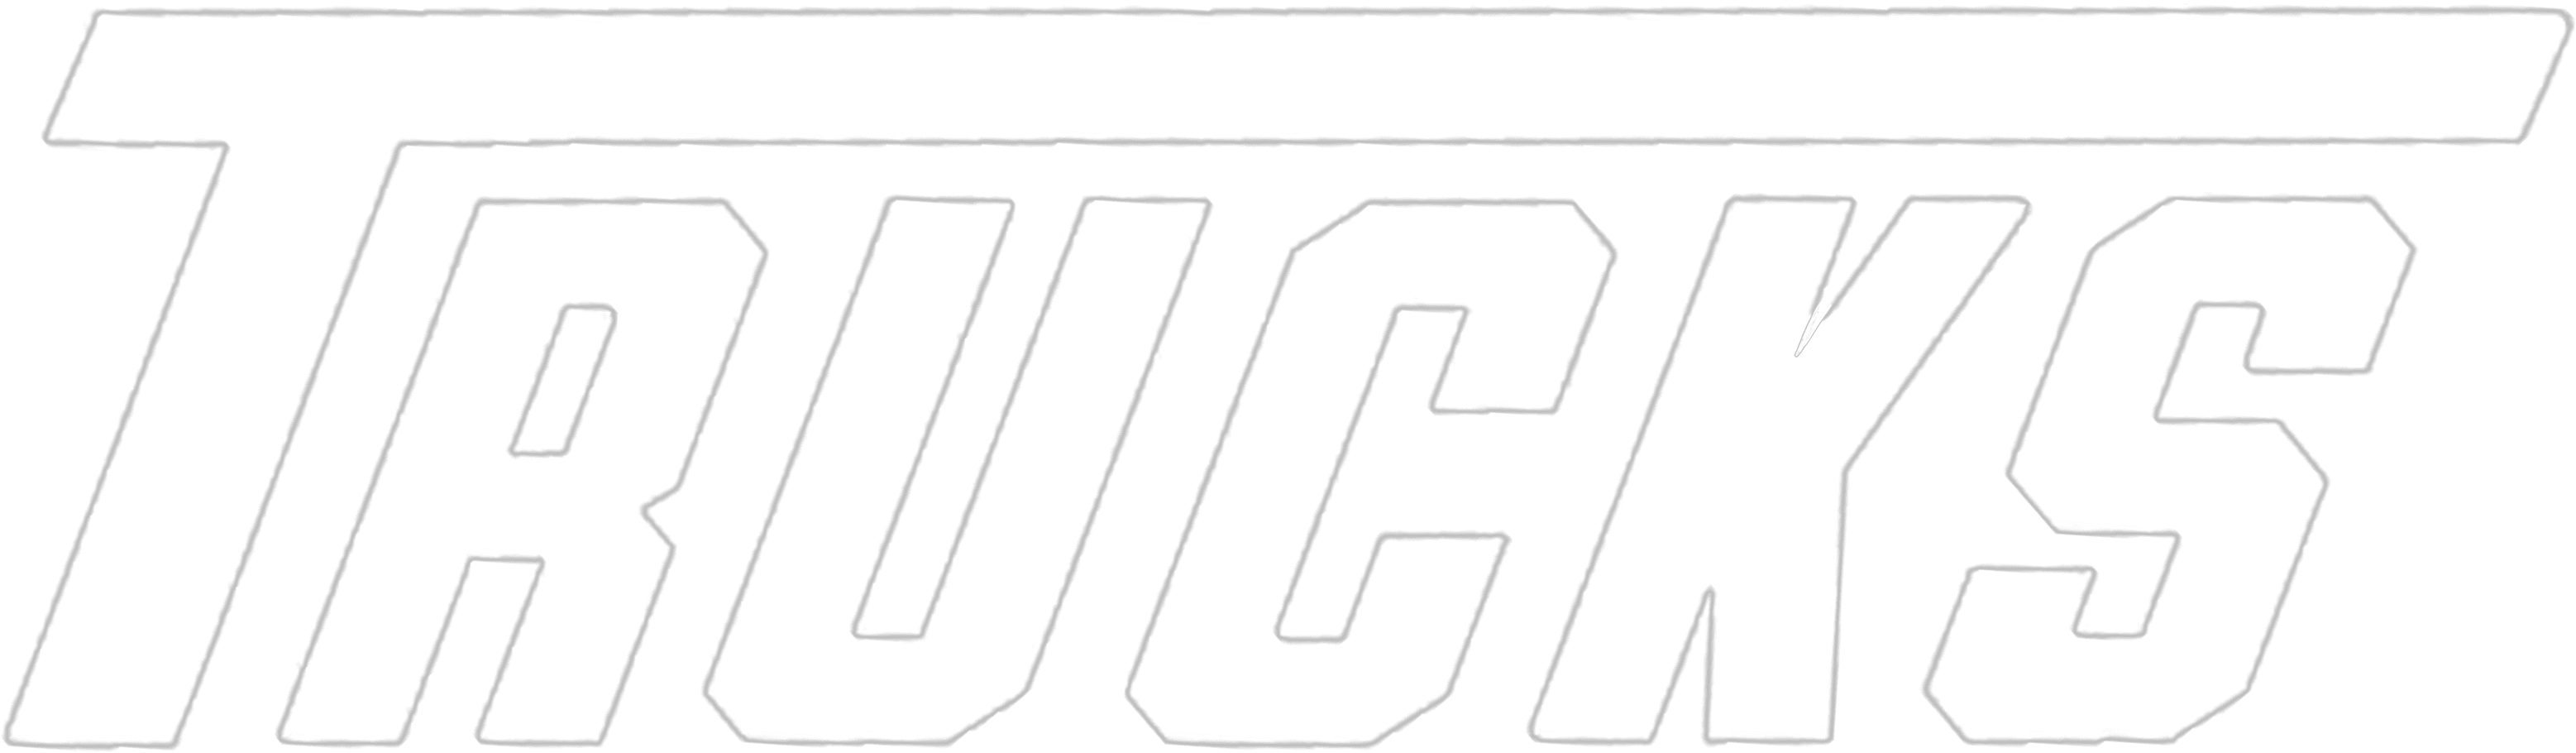 Trucks logo